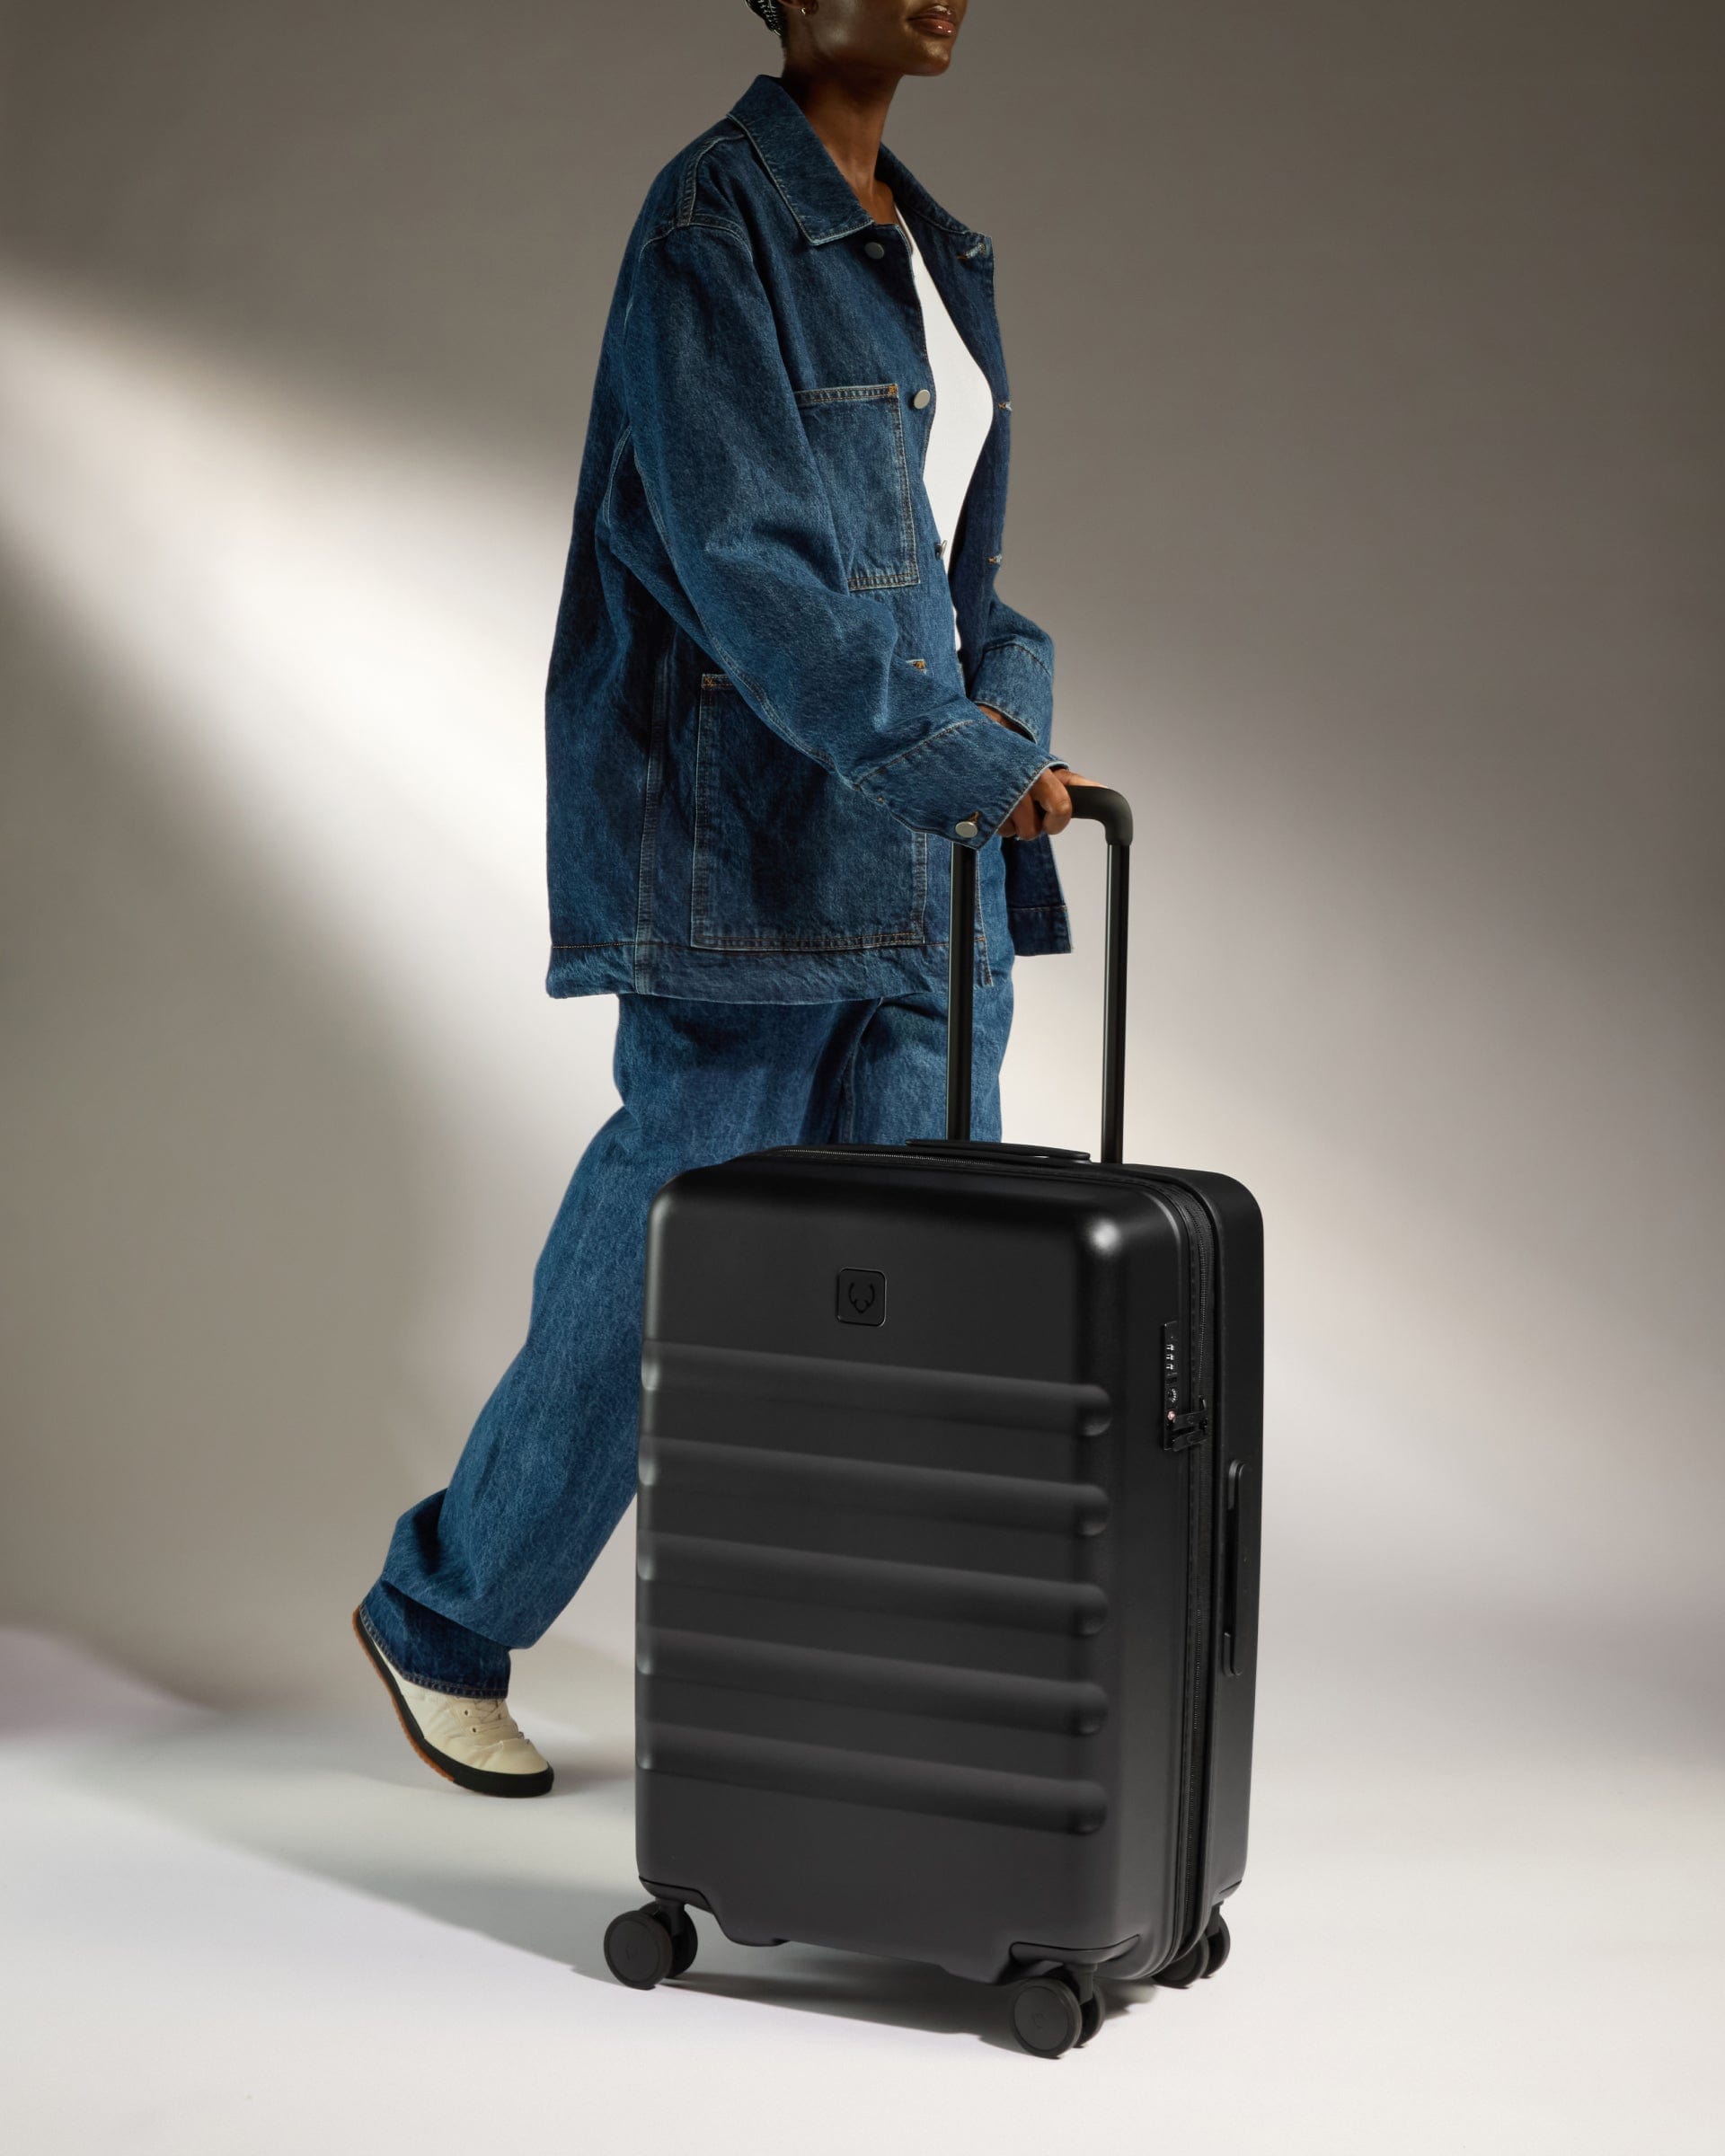 View Antler Icon Stripe Medium Suitcase In Black Size 455cm x 66cm x 30cm information